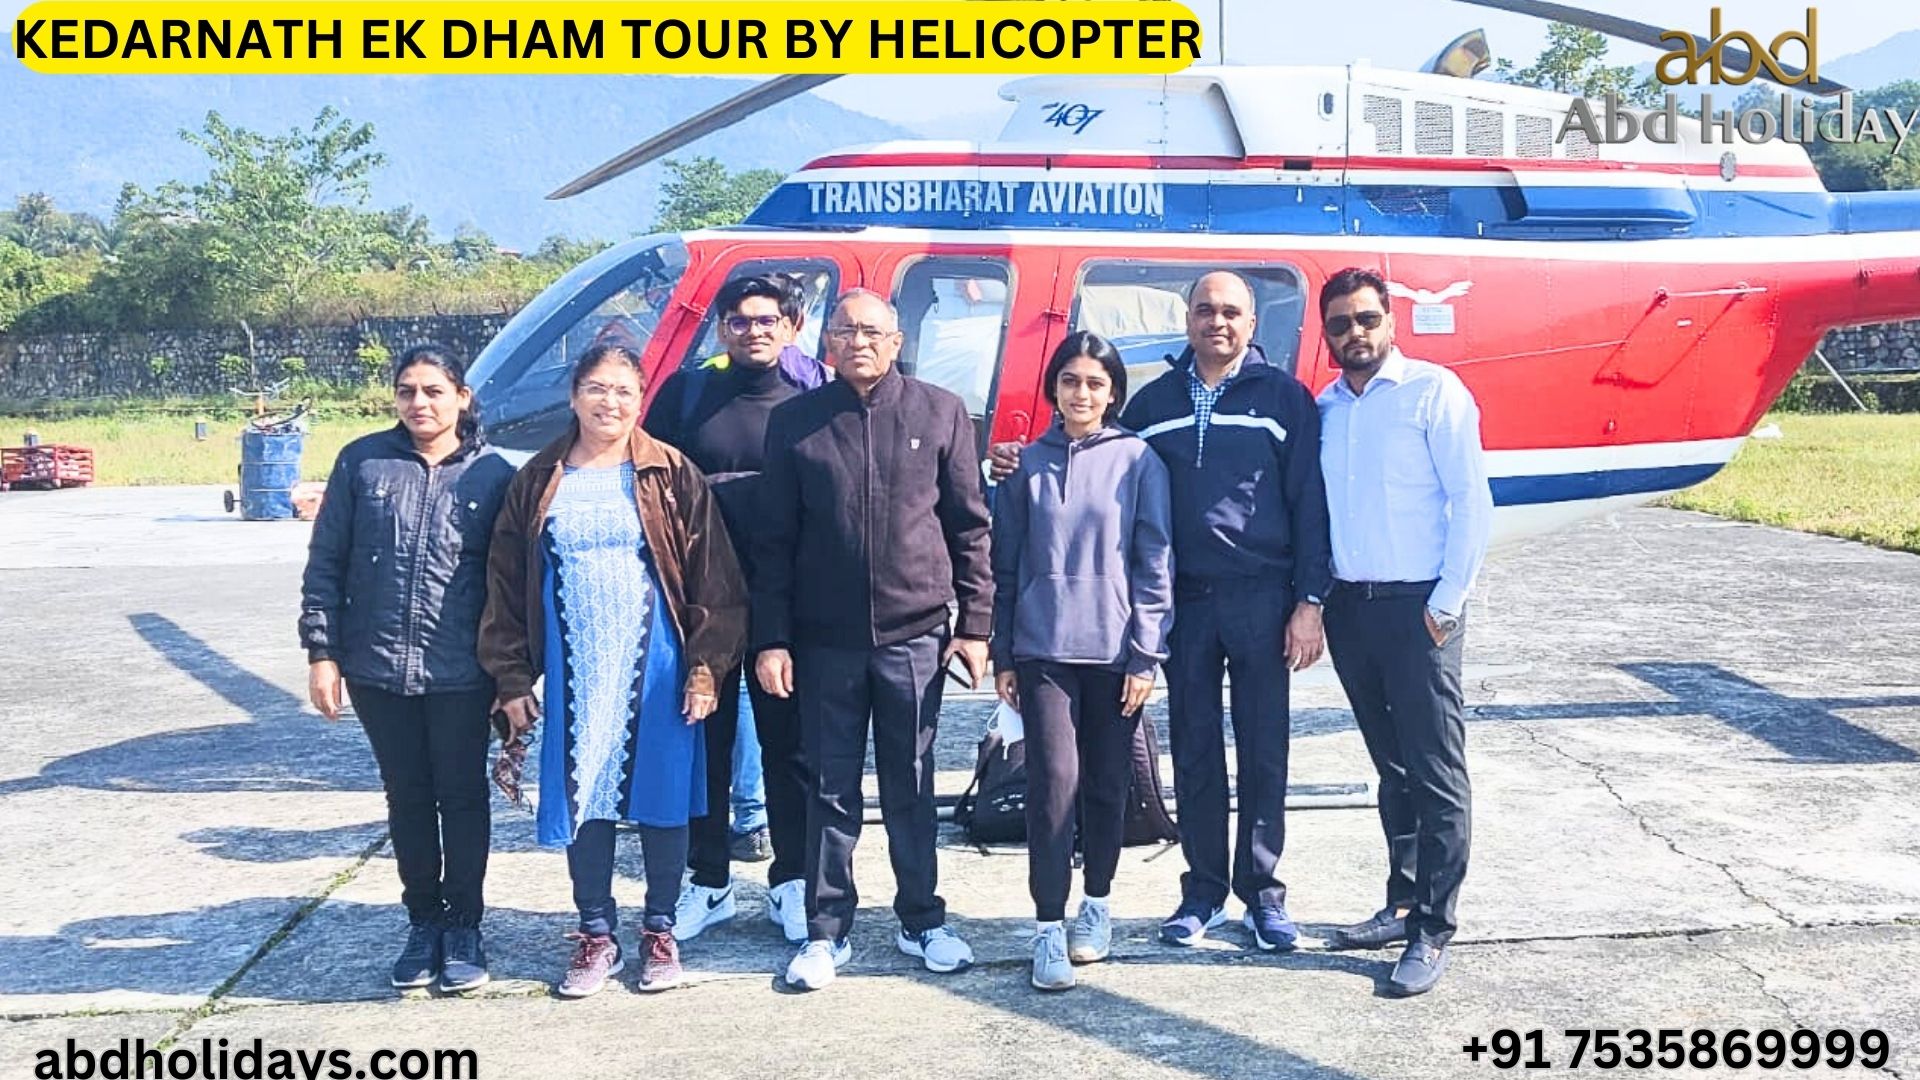 KEDARNATH EK DHAM TOUR BY HELICOPTER